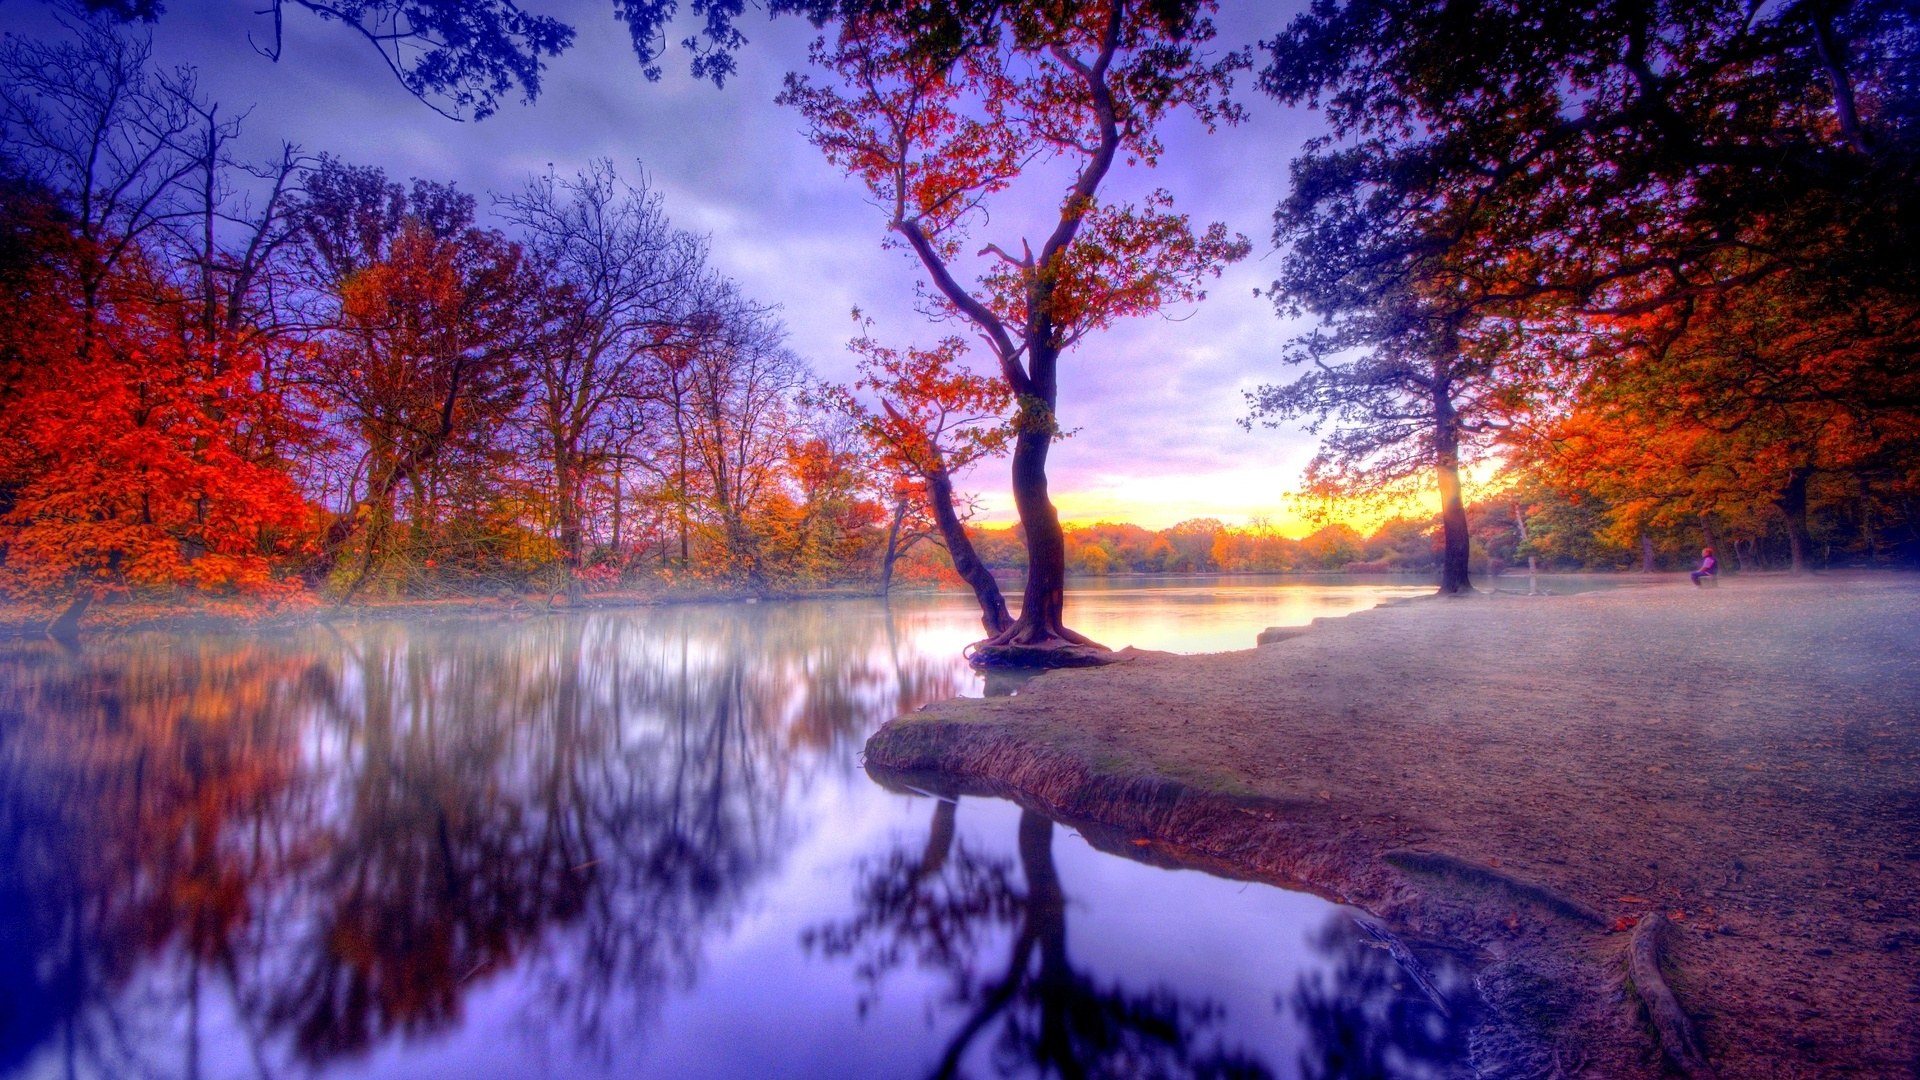 Autumn Landscape Full HD Desktop Wallpapers 1080p 1920x1080